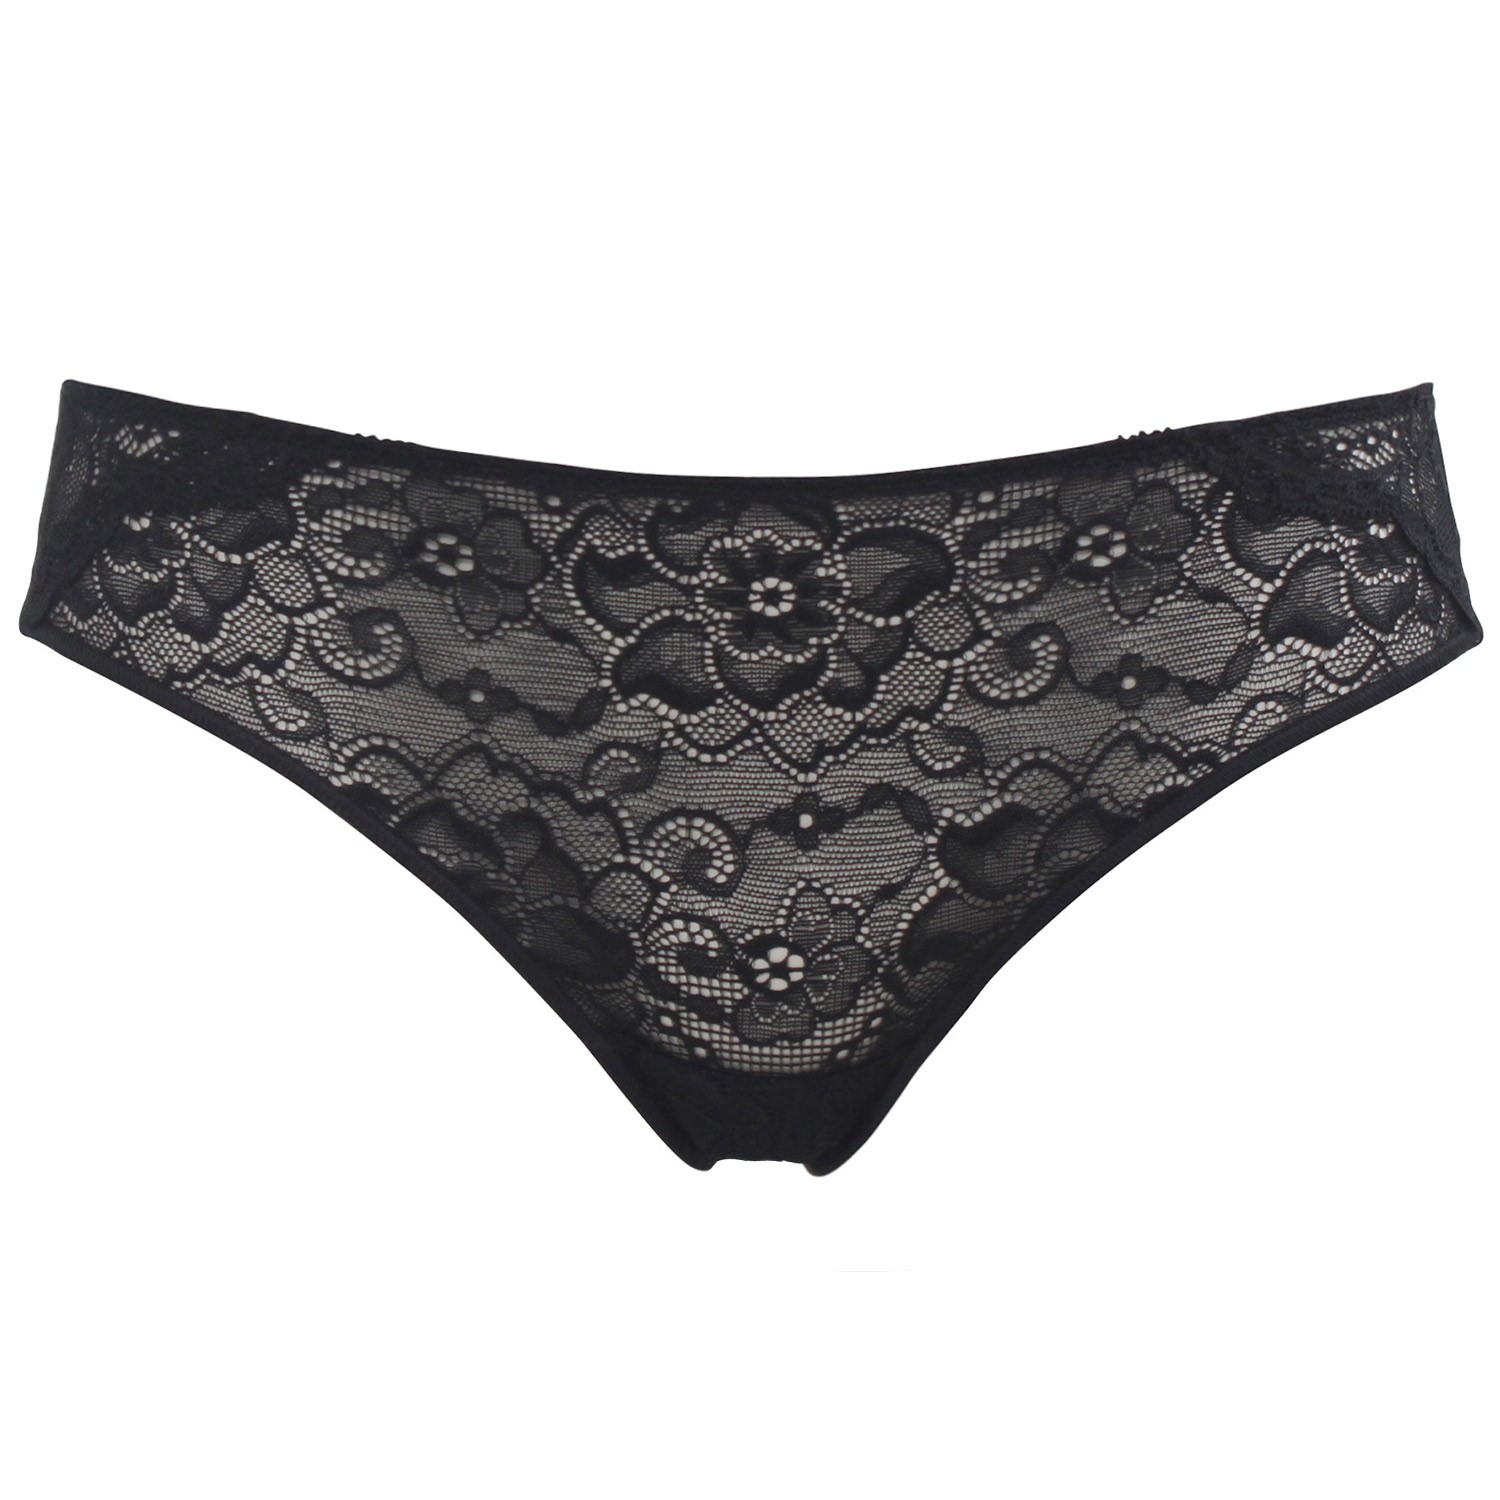 Femilet Lulu Tanga Brief - Brief - Briefs - Underwear - Timarco.co.uk